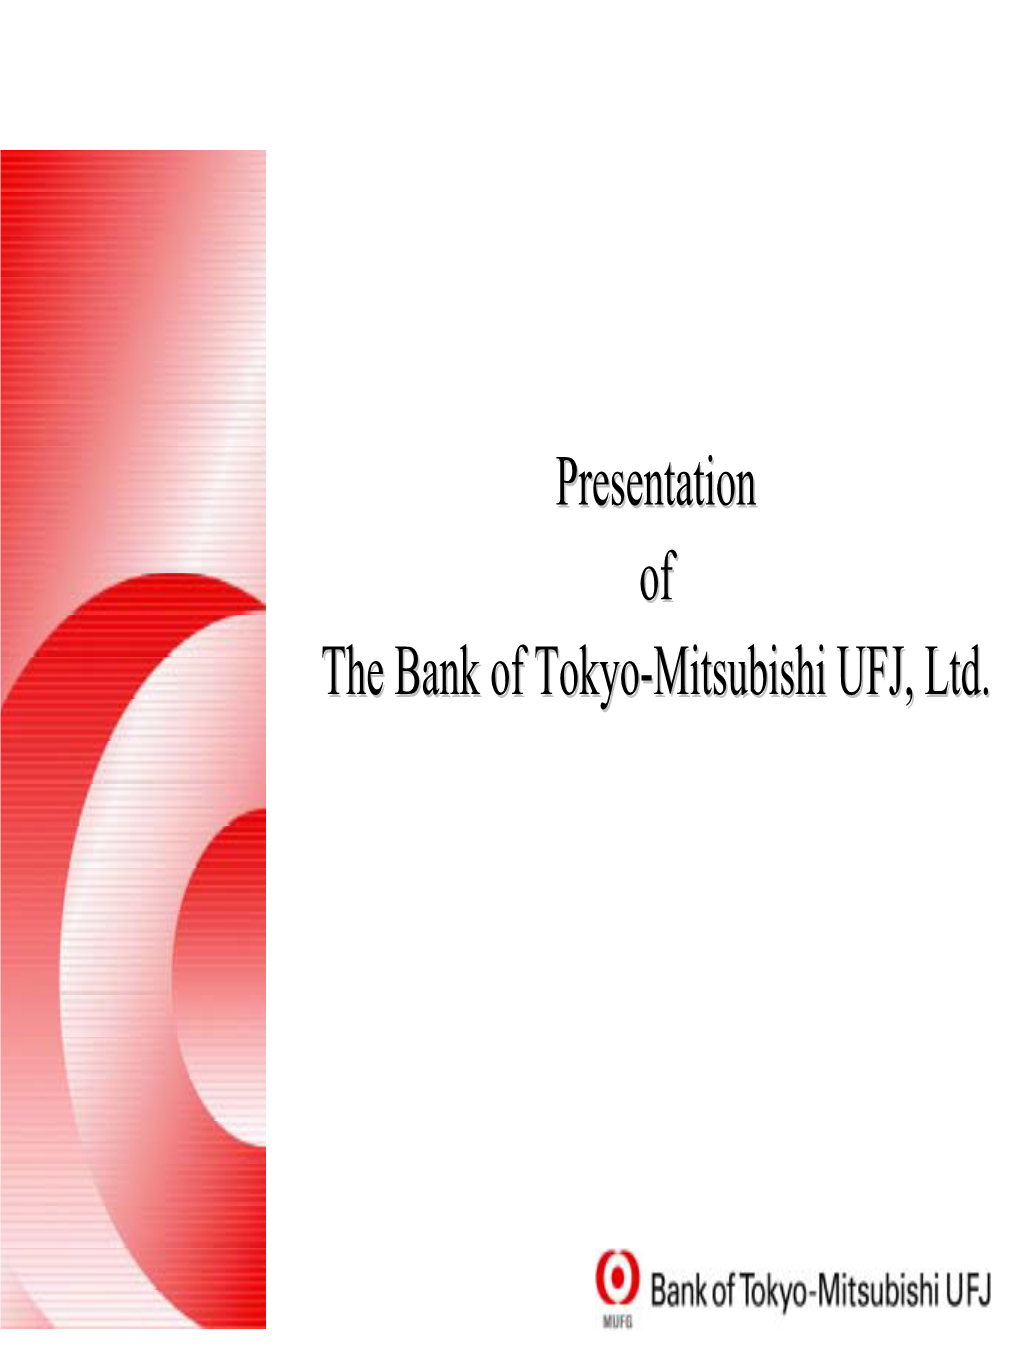 Presentation of the Bank of Tokyo-Mitsubishi UFJ, Ltd